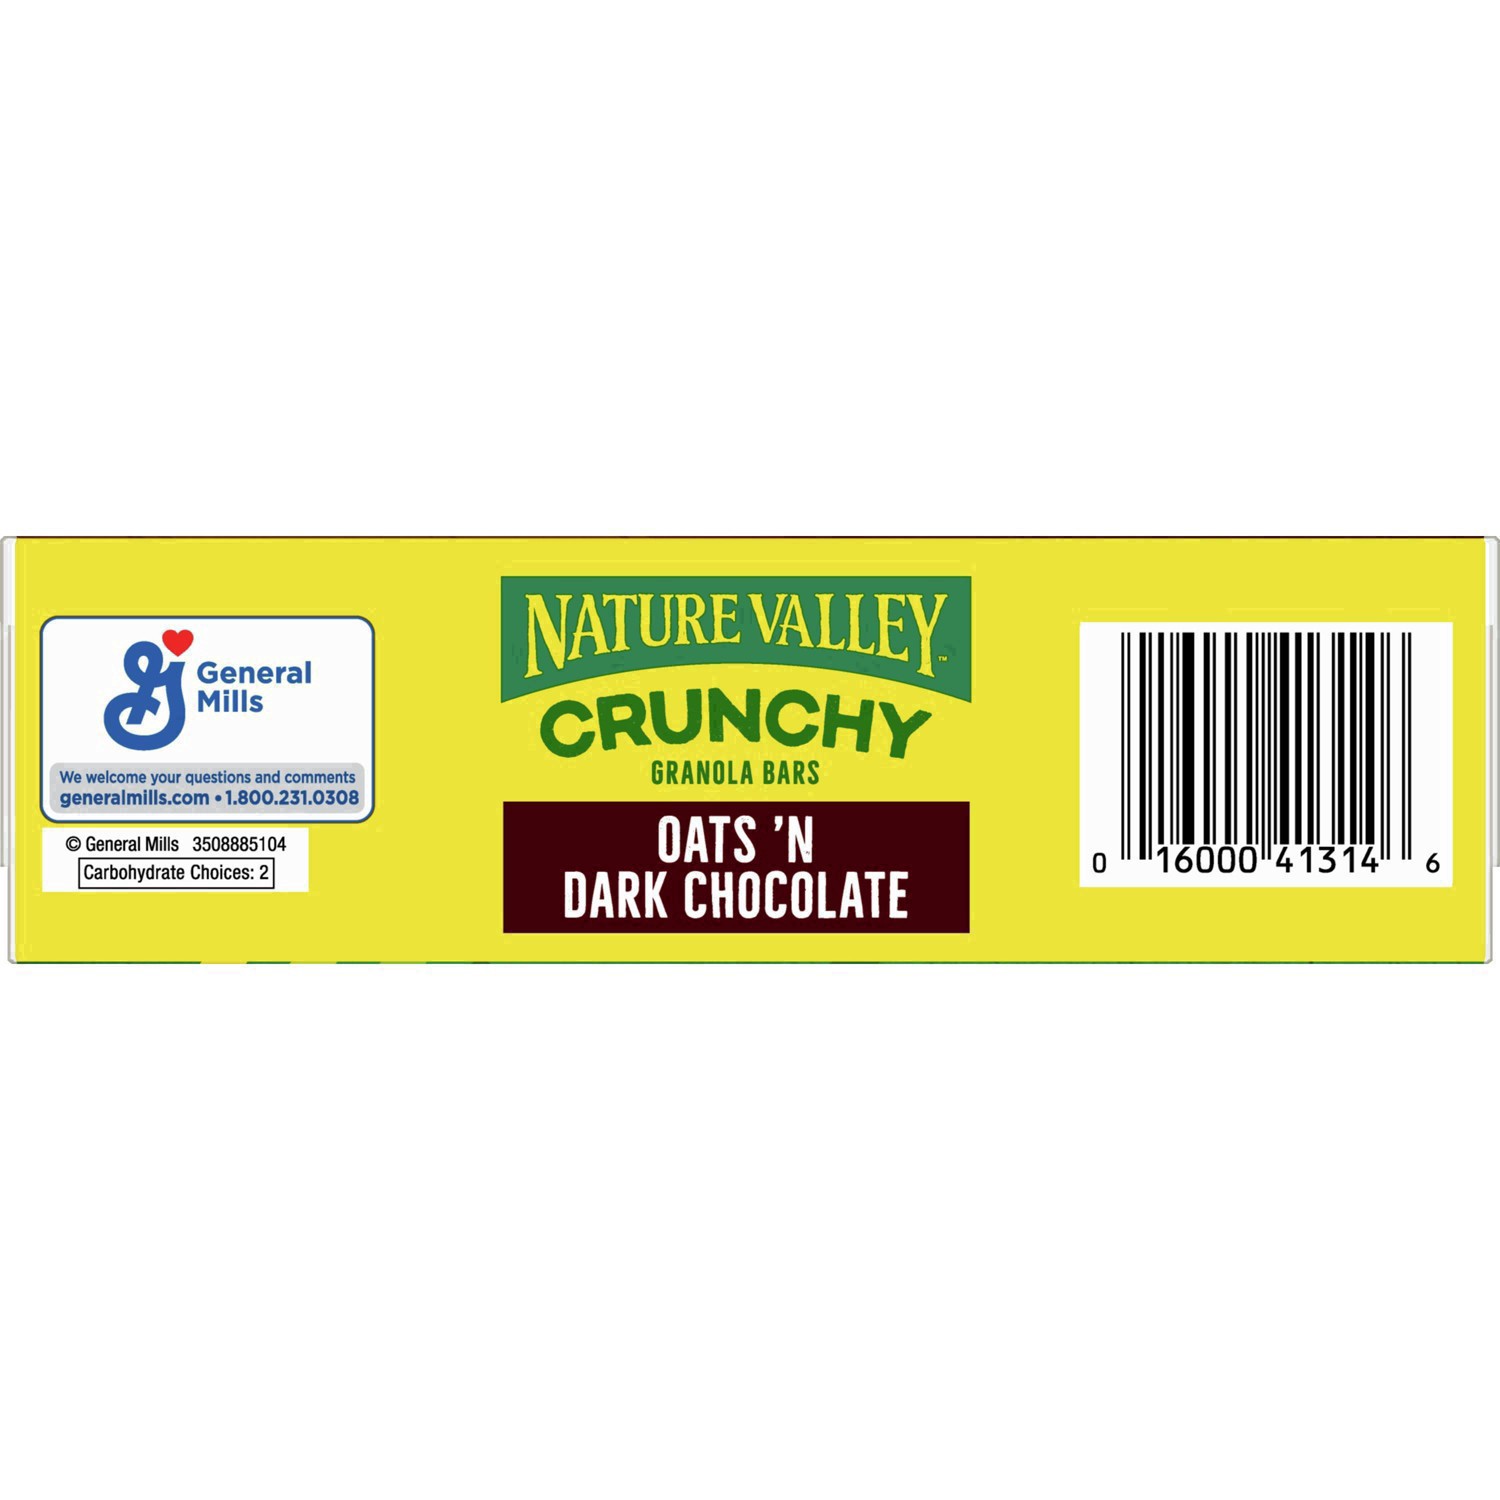 slide 108 of 137, Nature Valley Crunchy Granola Bars, Oats 'n Dark Chocolate, 6 ct, 12 bars, 6 ct